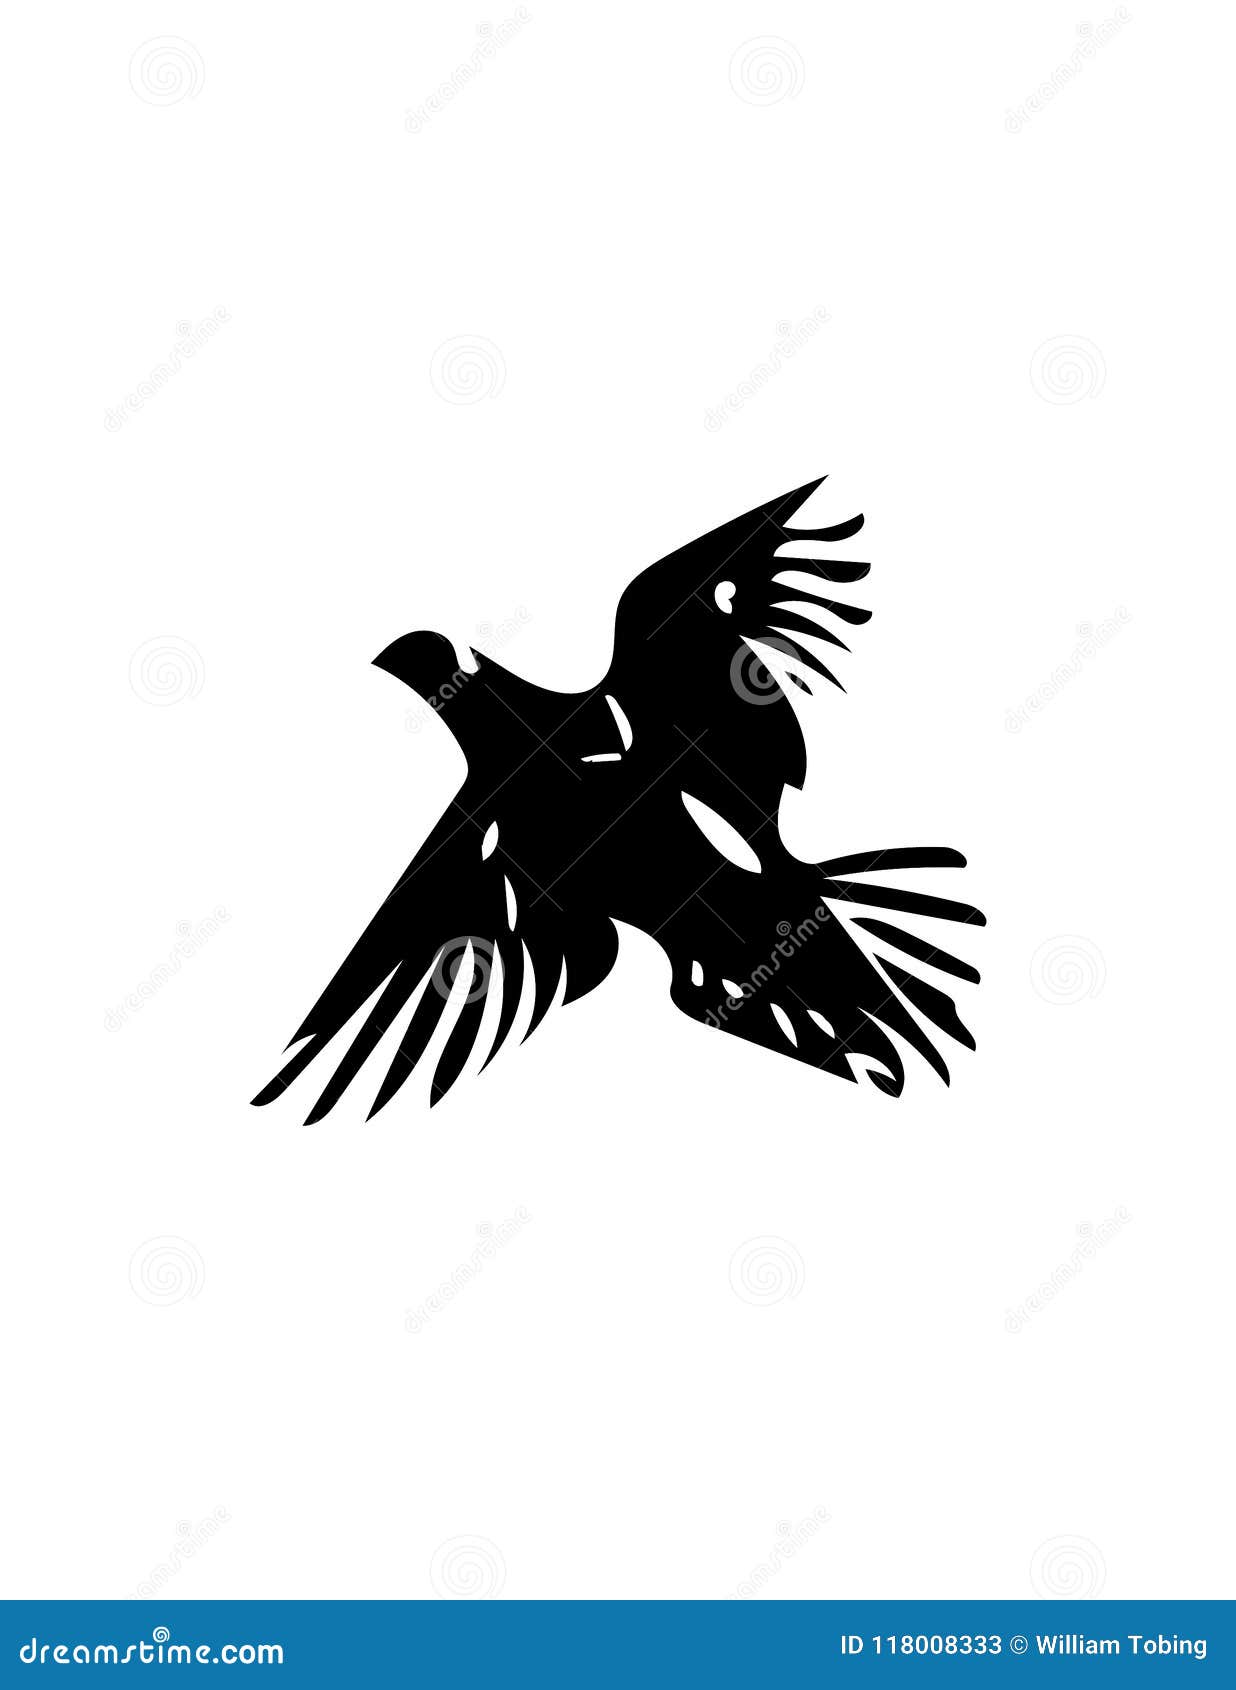 Bird logo stock illustration. Illustration of isolated - 118008333